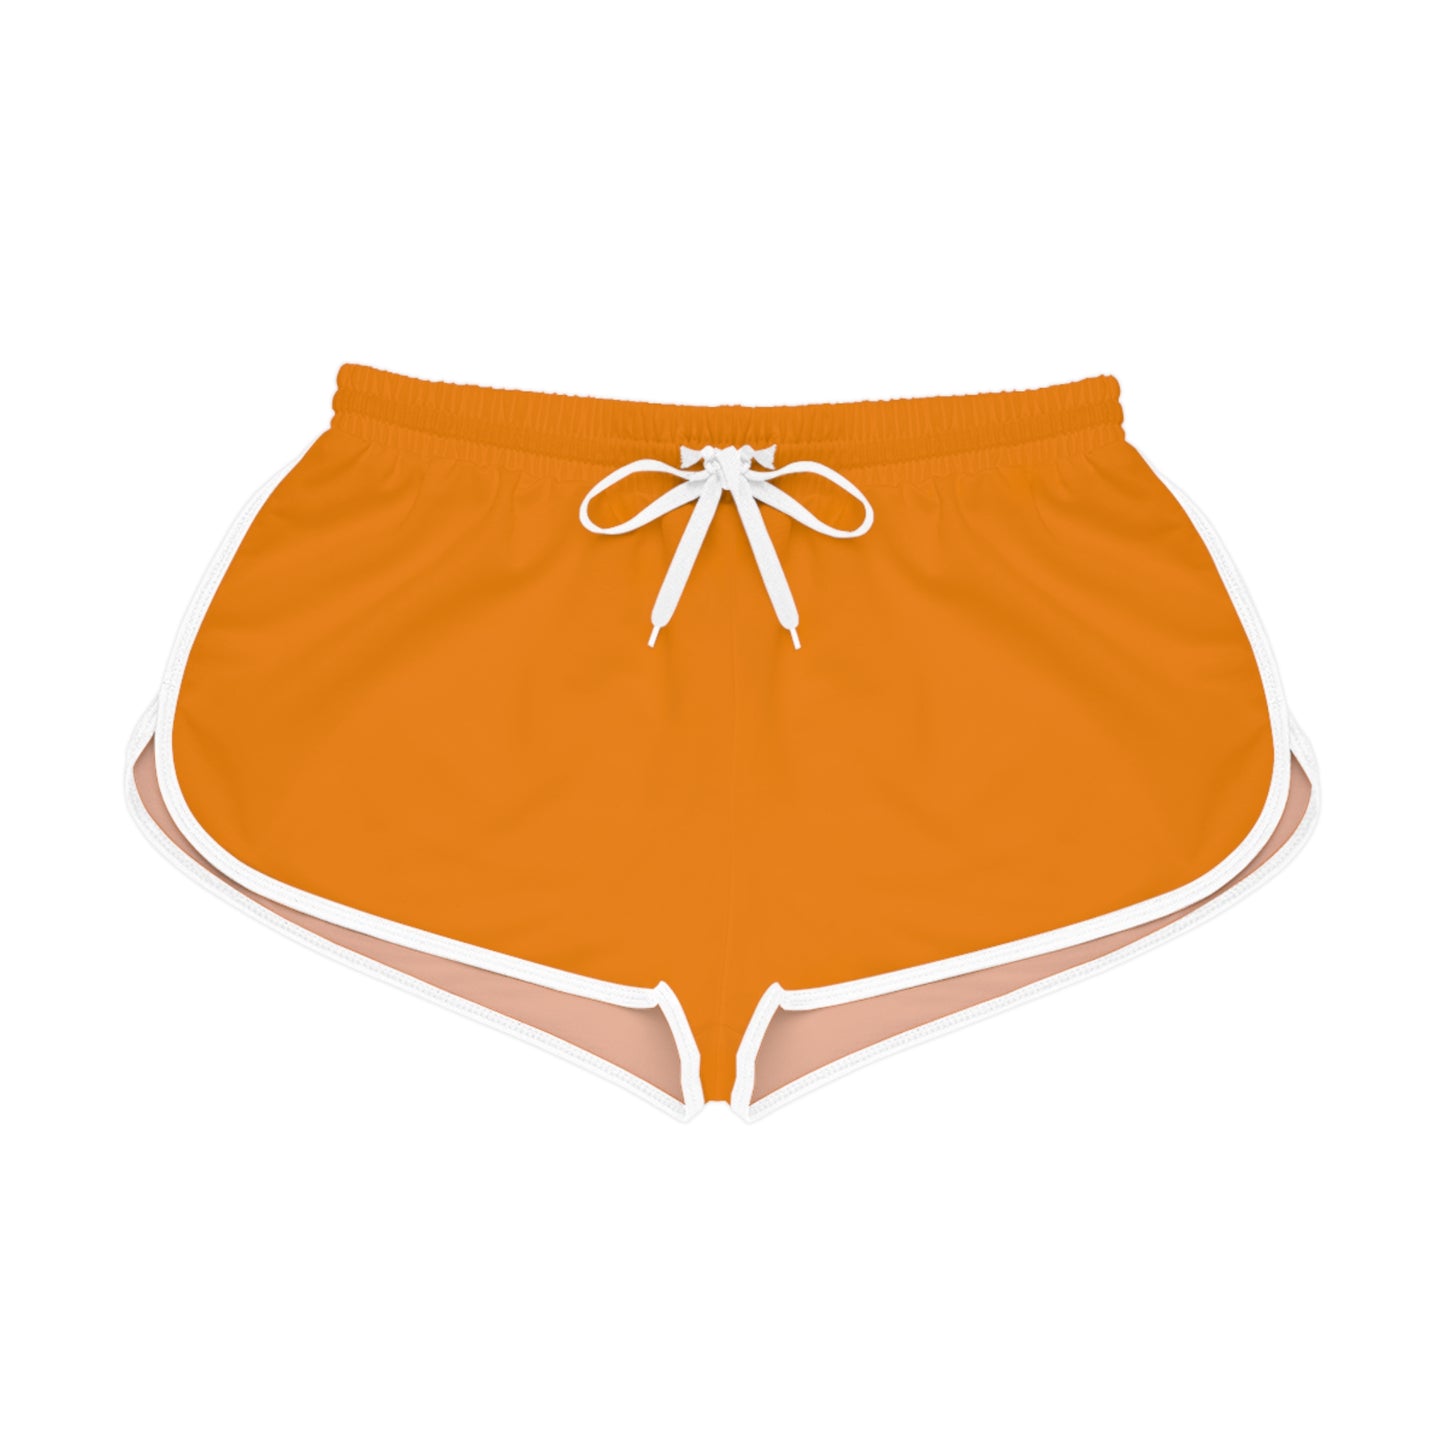 Tangerine Women's Relaxed Shorts